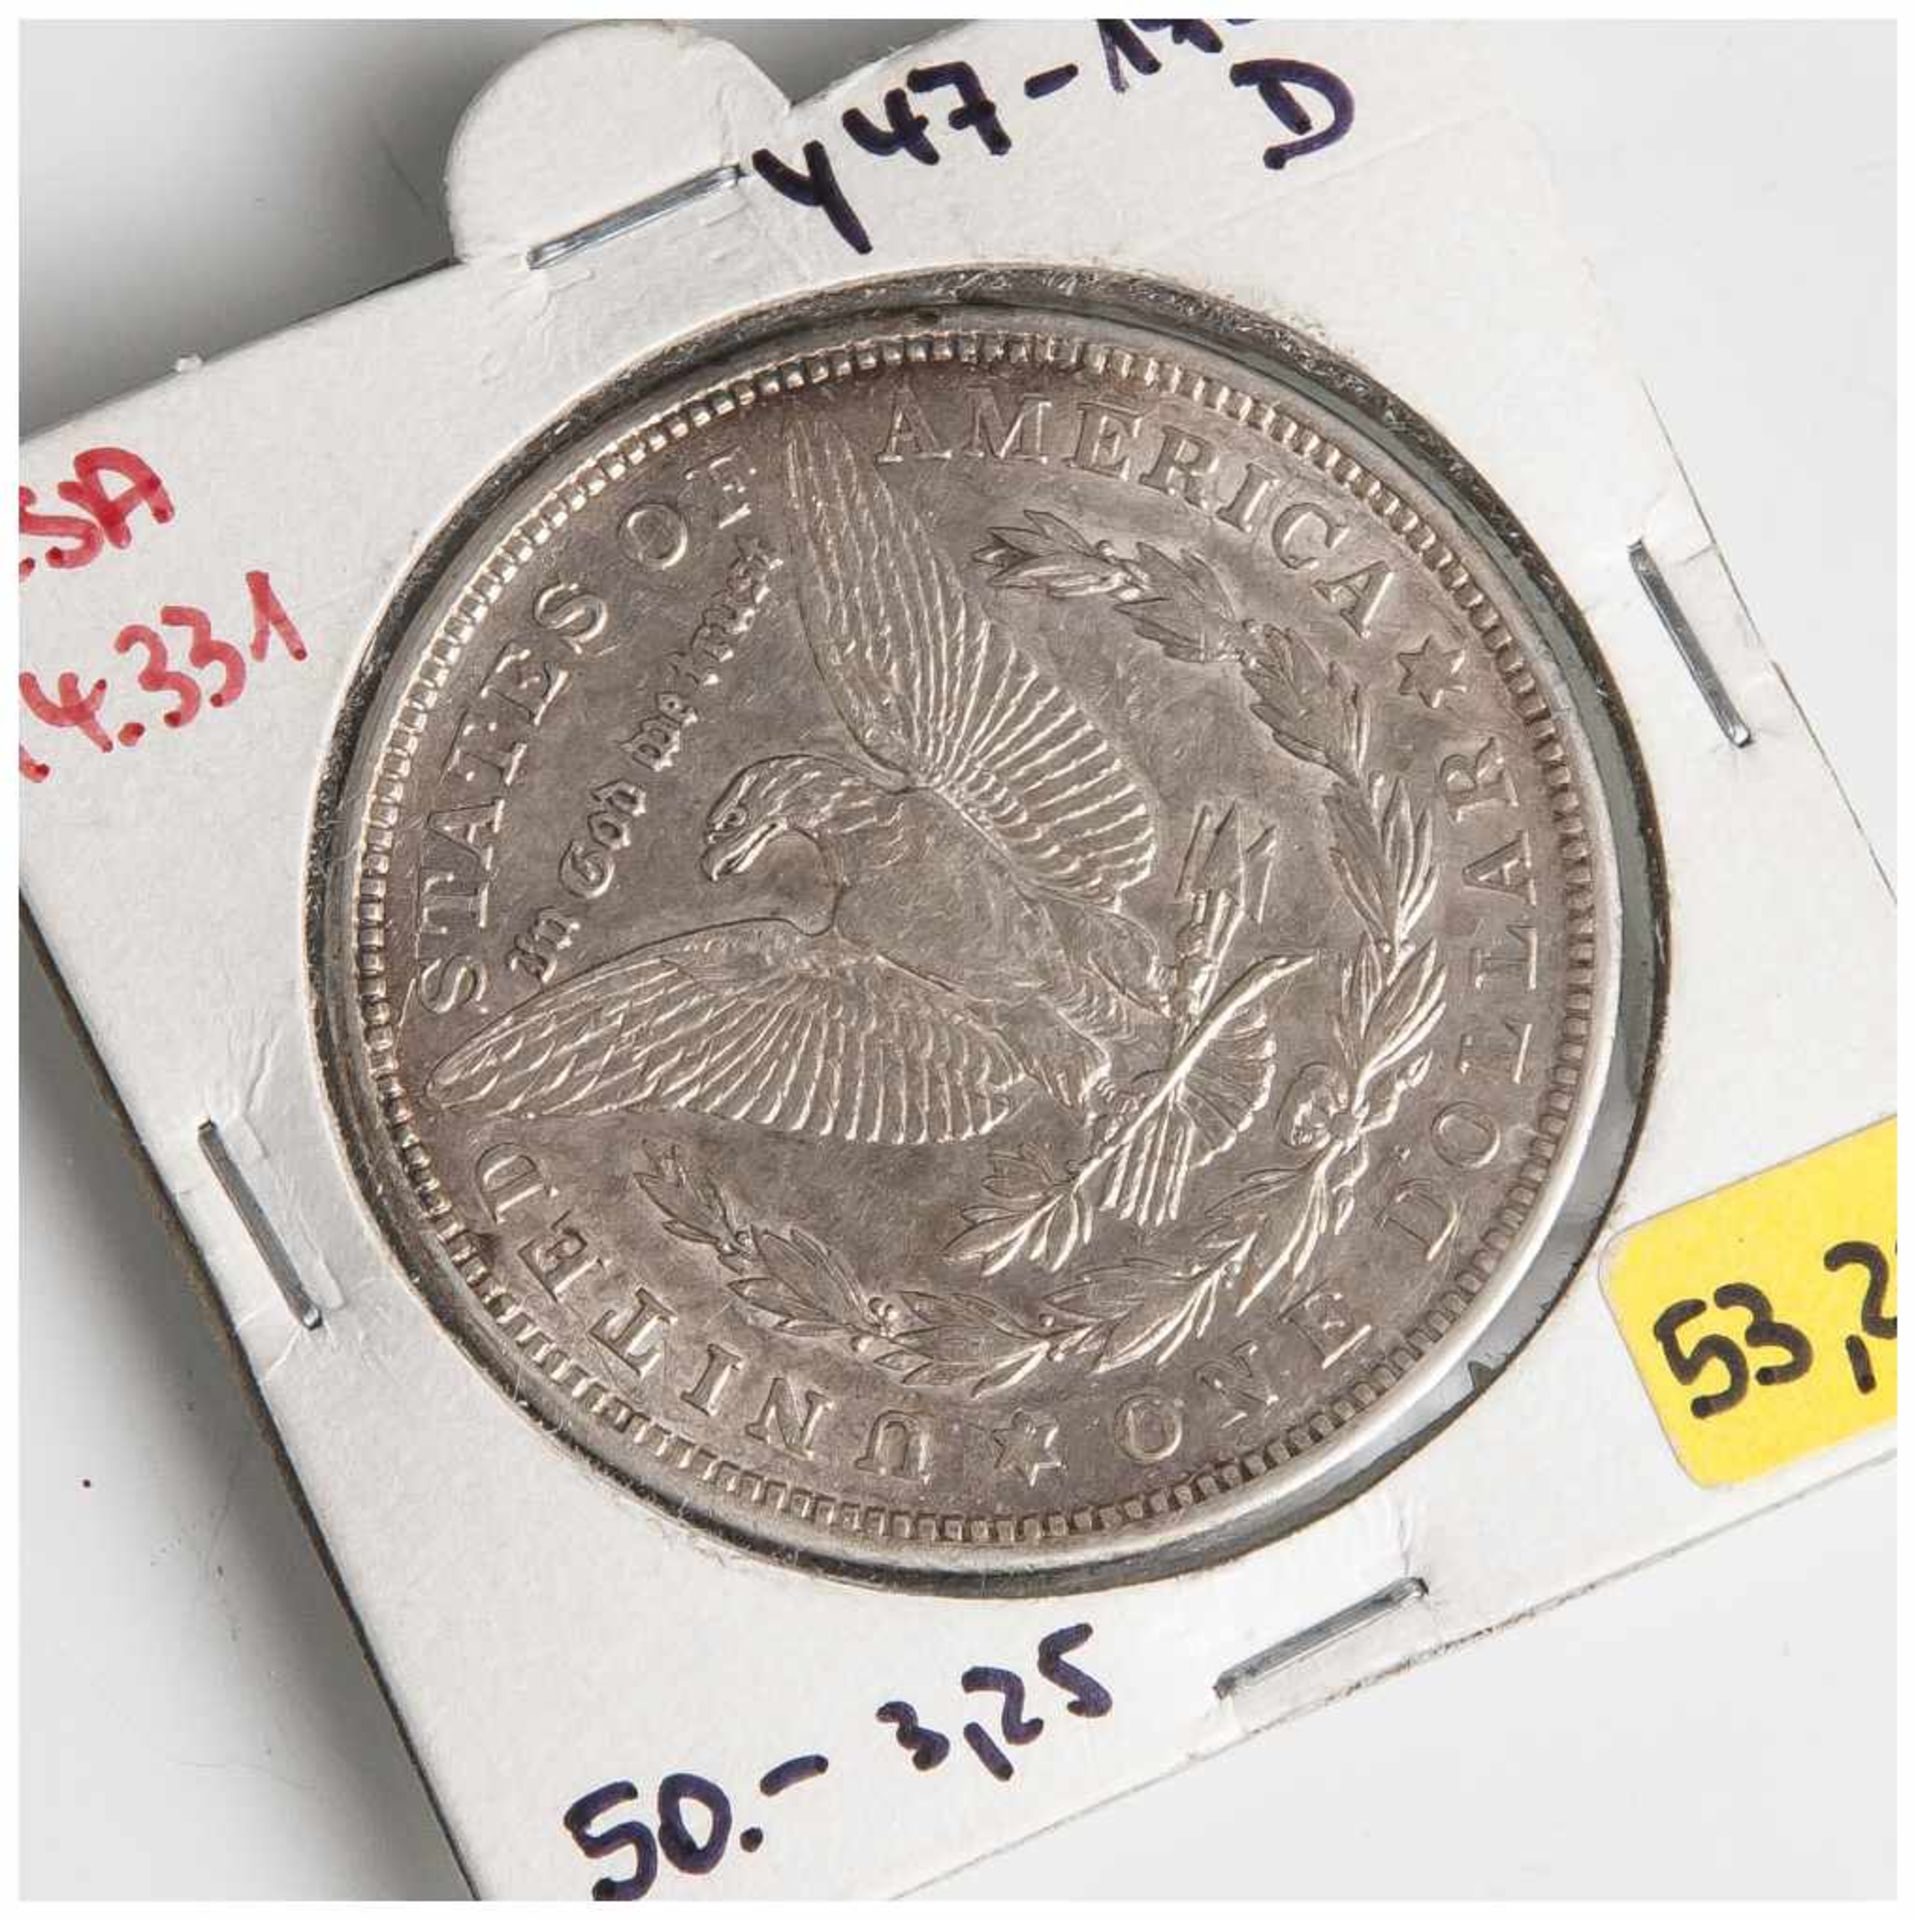 Morgan Silberdollar, 1 Dollar, United States of America, 1921 D, vorderseitig Adler mit